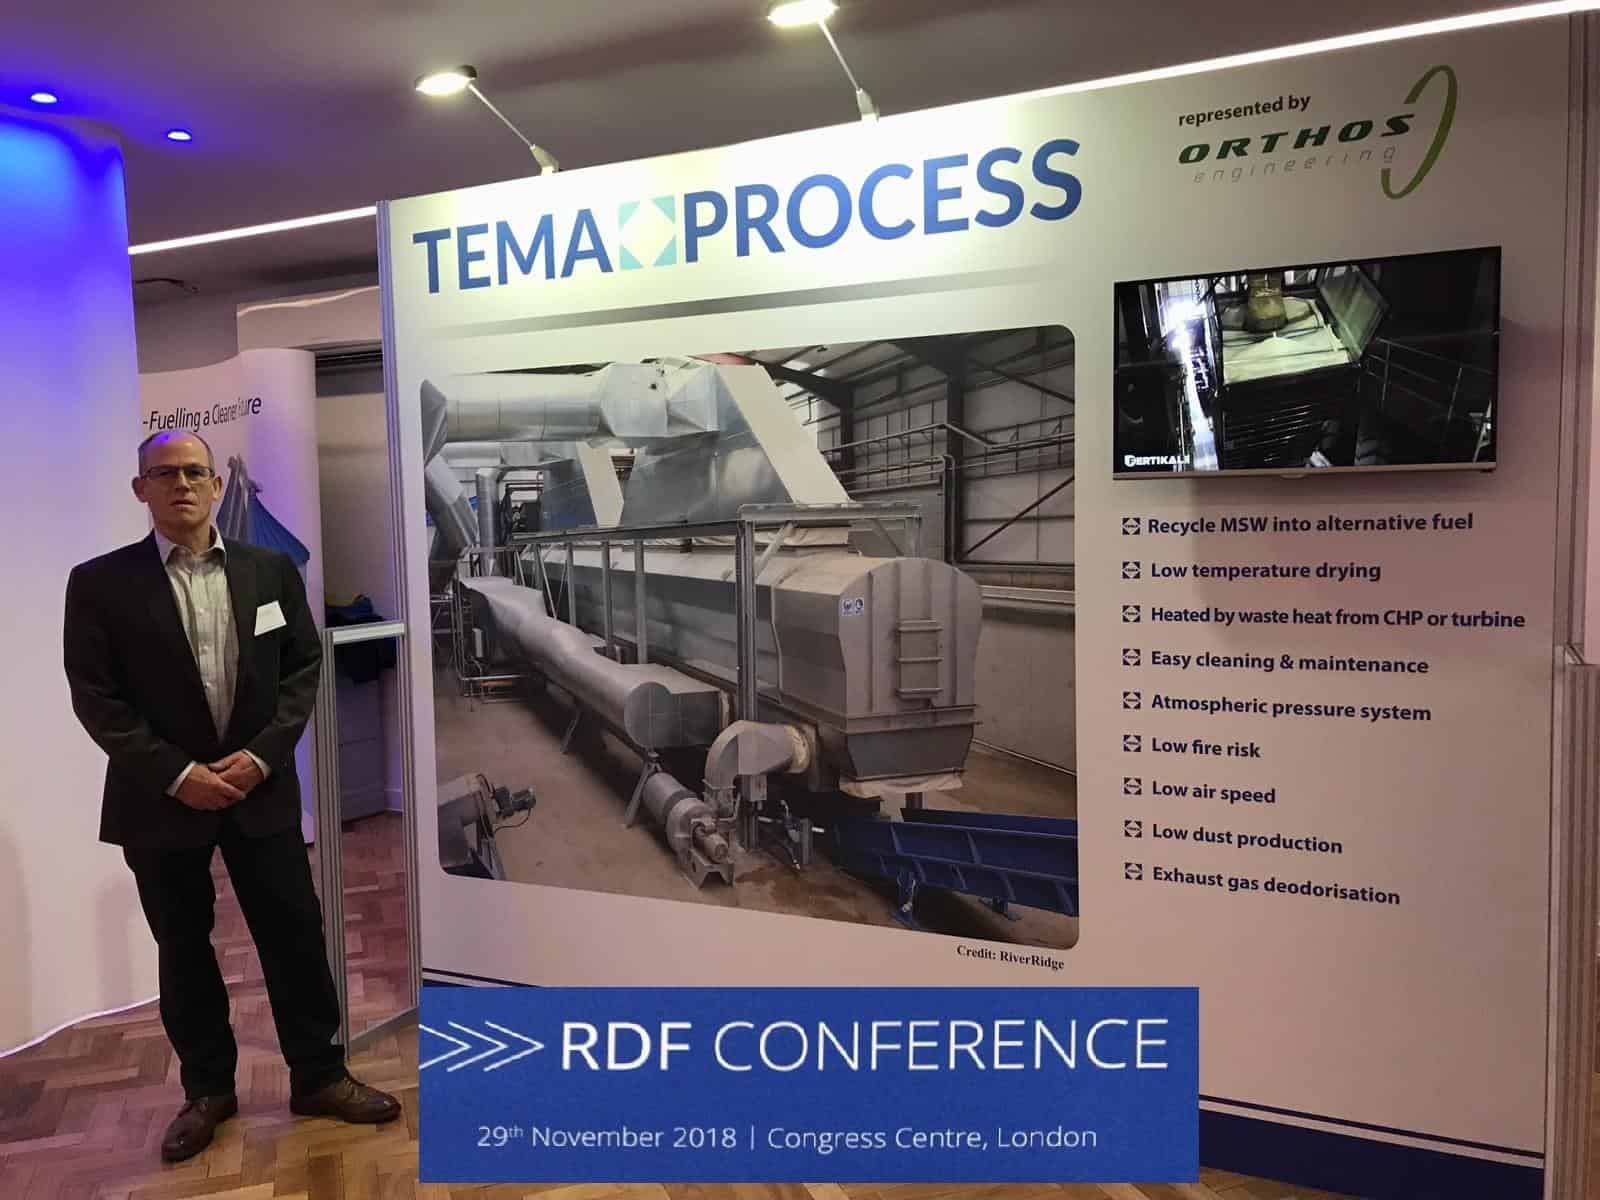 RDF-Conference-TEMA-Process-Orthos-Engineering